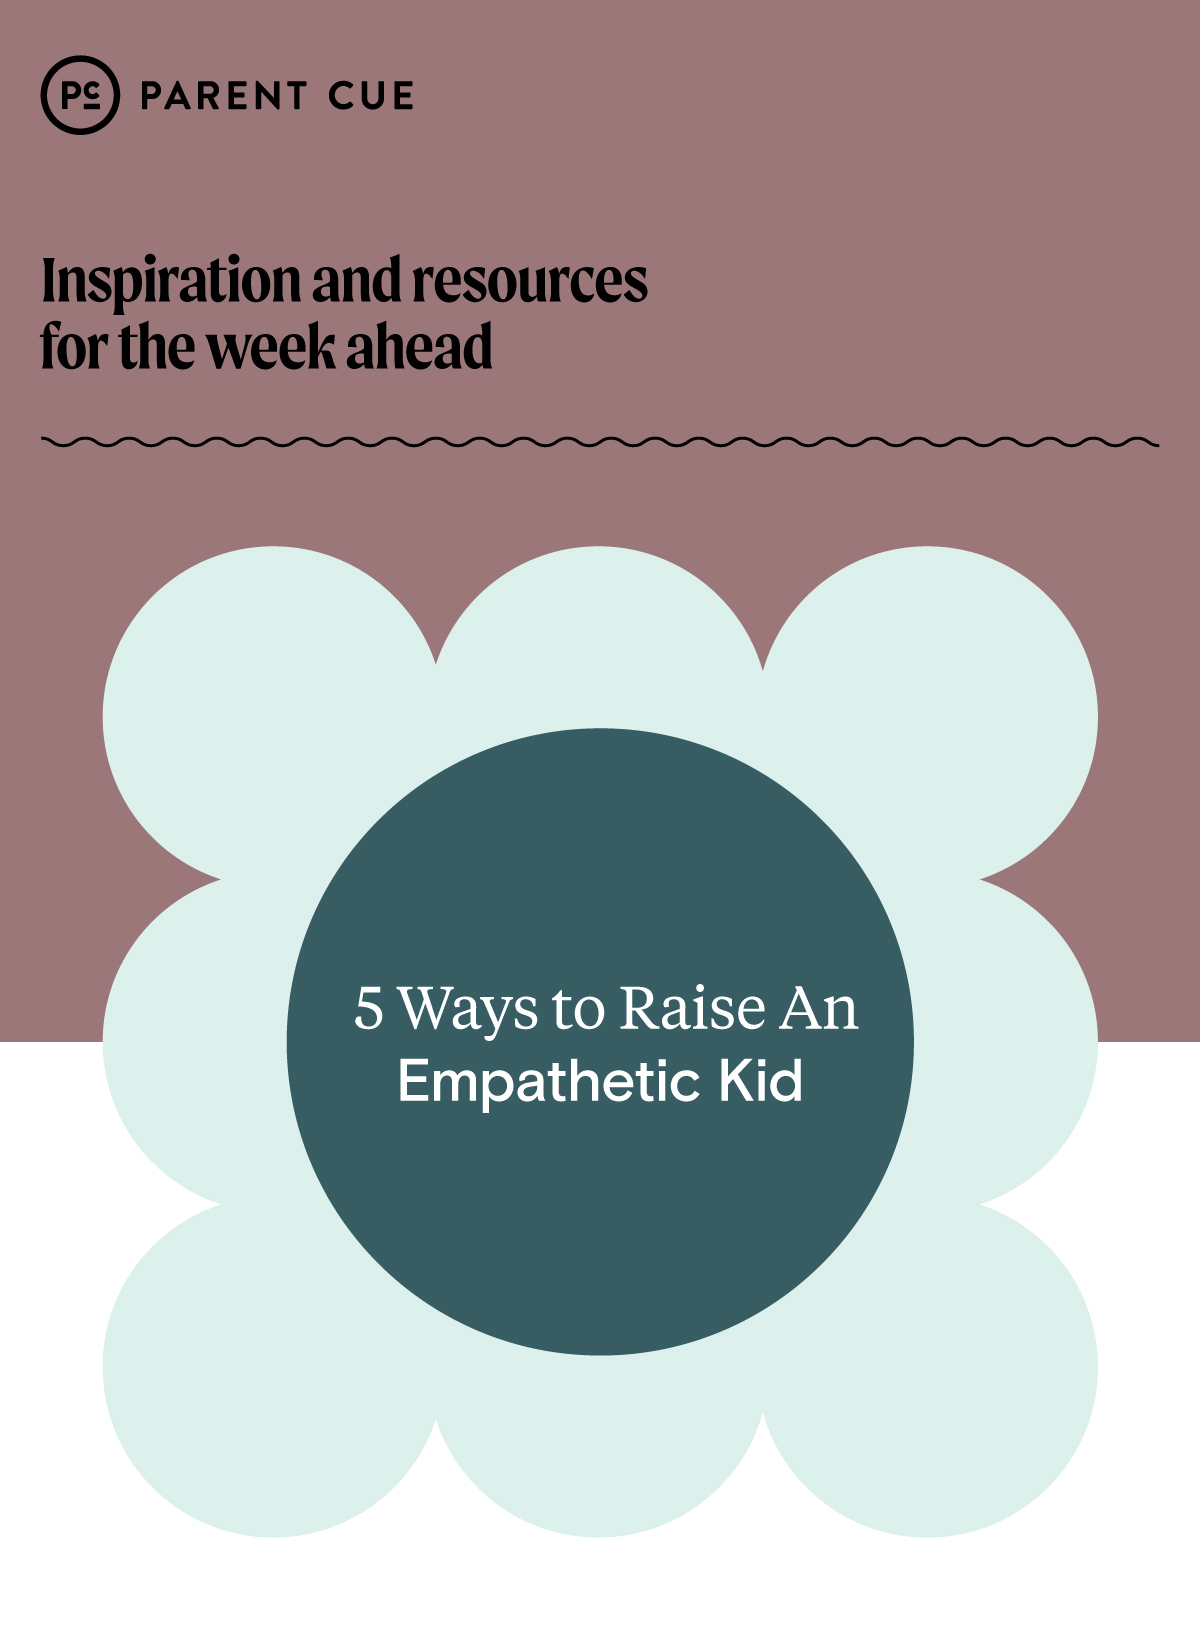 5 Ways to Raise An Empathetic Kid